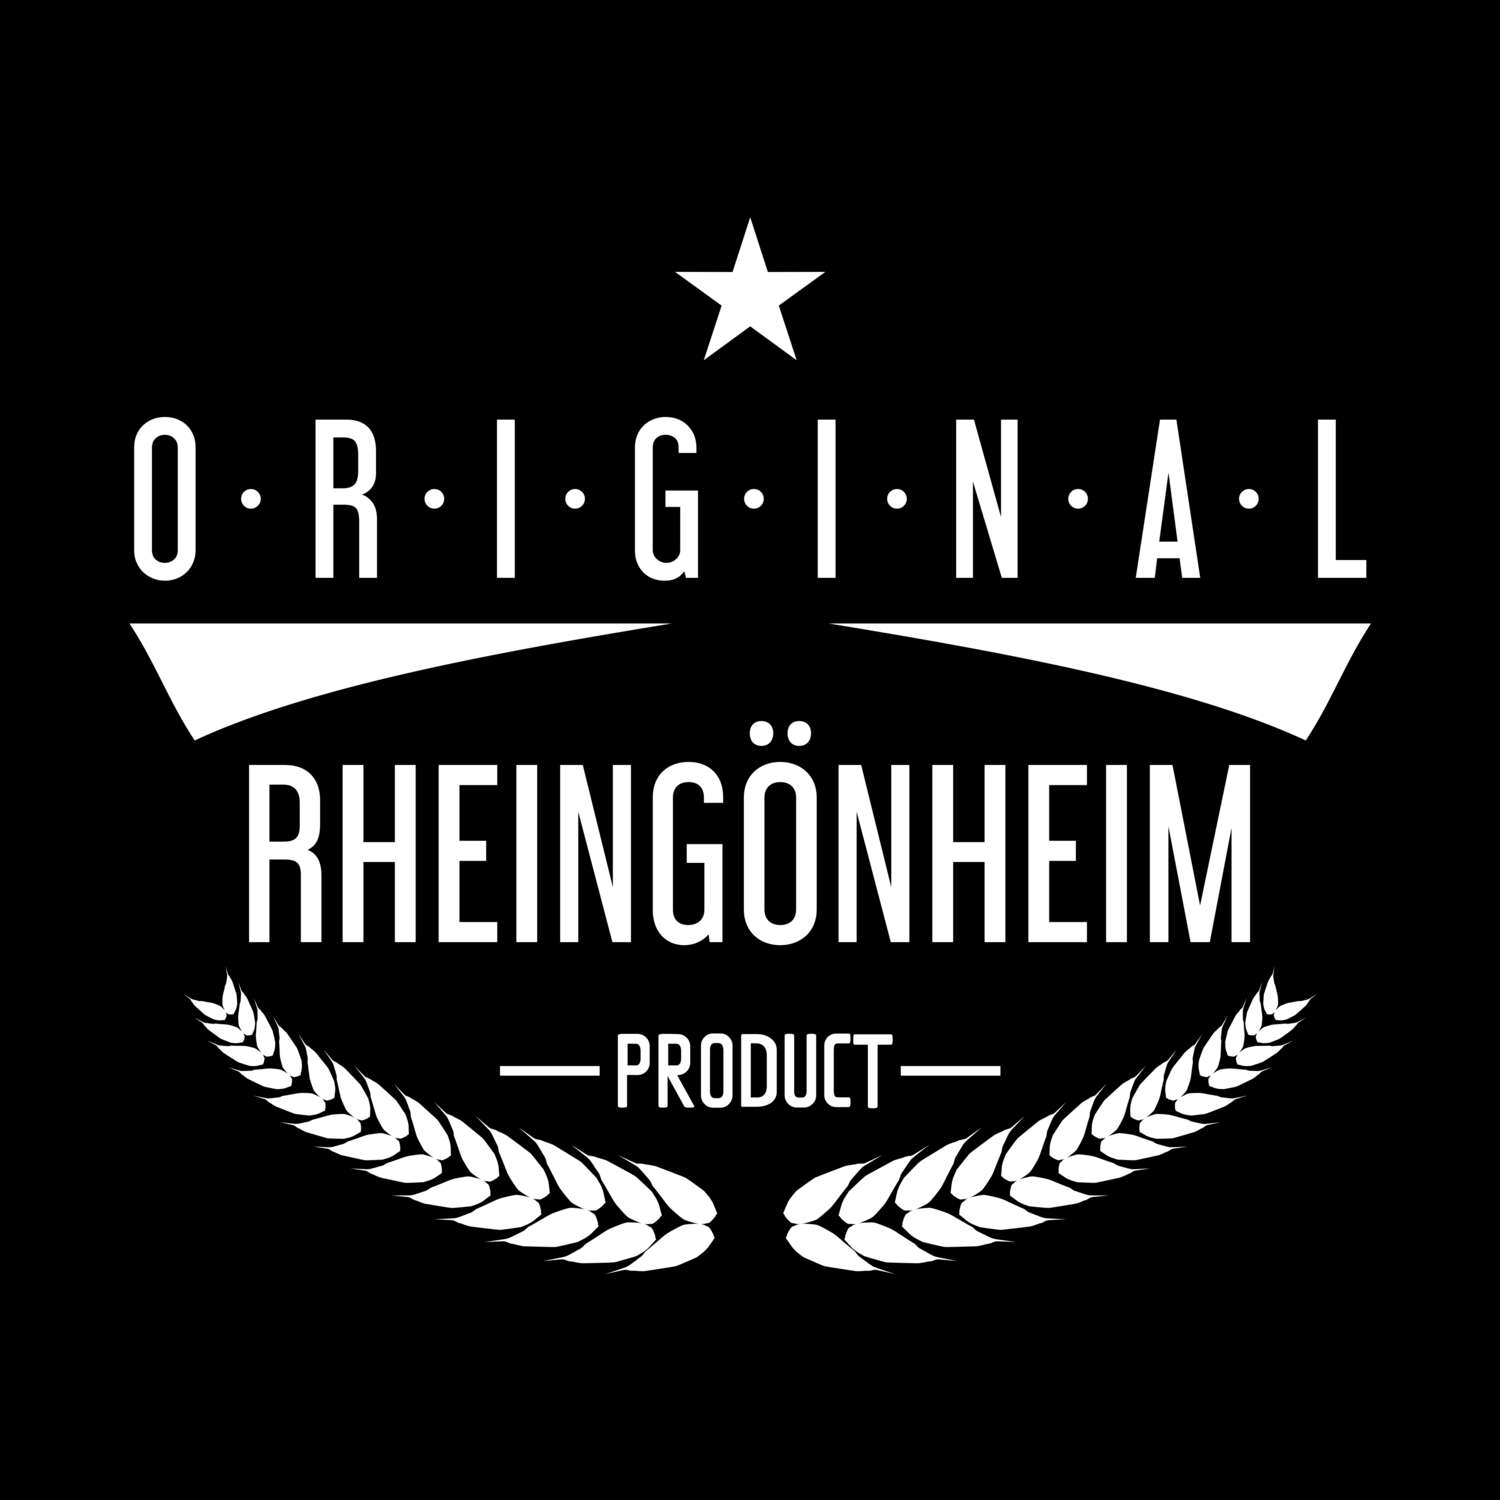 Rheingönheim T-Shirt »Original Product«